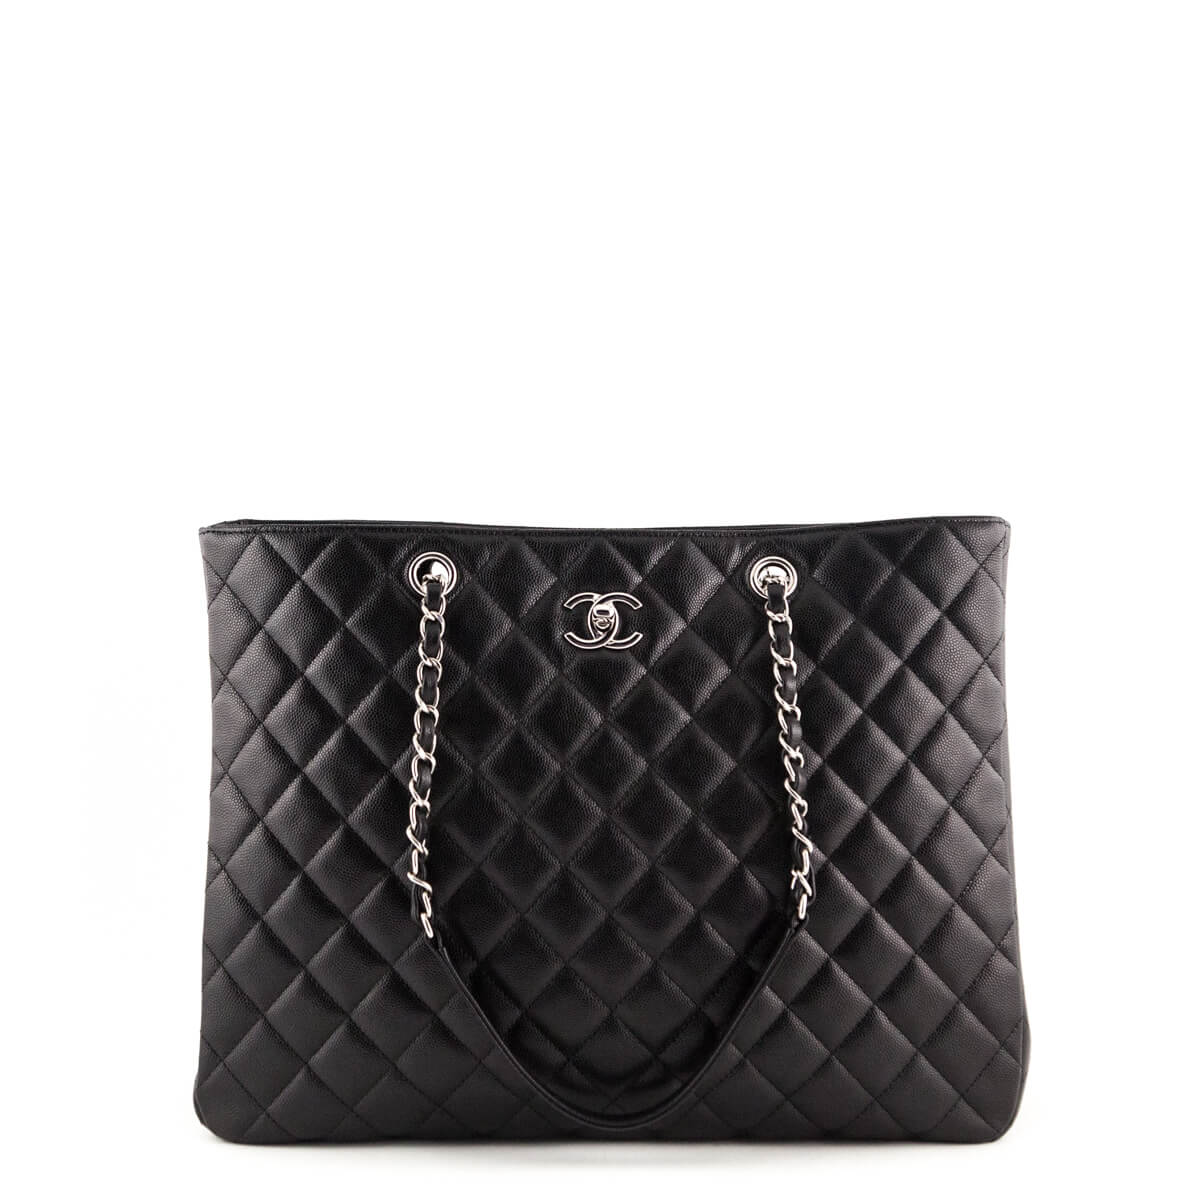 Chanel Black Caviar Classic Shopping Tote - Chanel Bags Canada